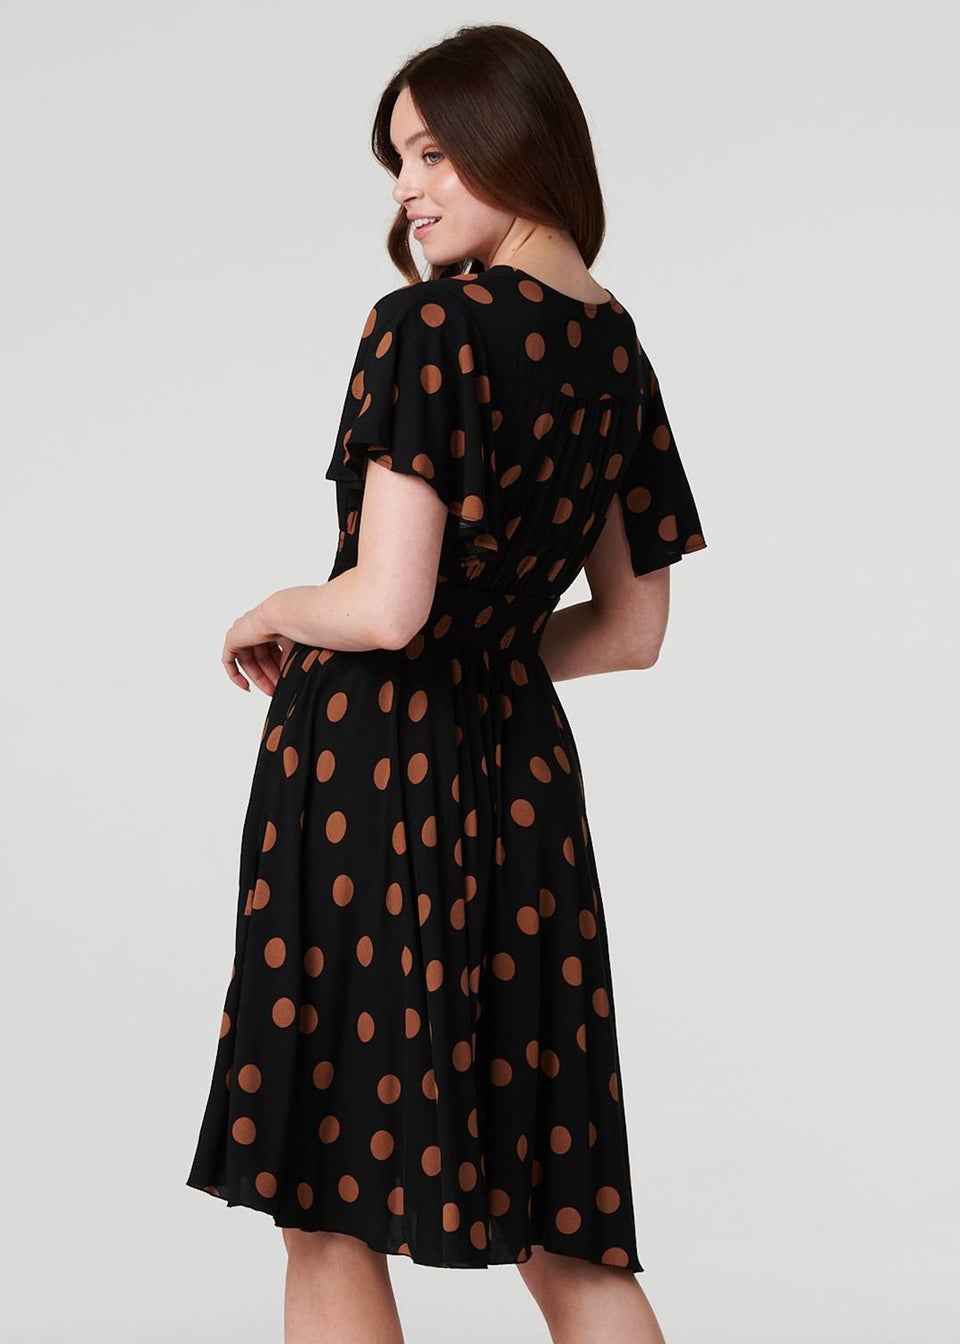 Izabel London Black Polka Dot Fit & Flare Short Dress